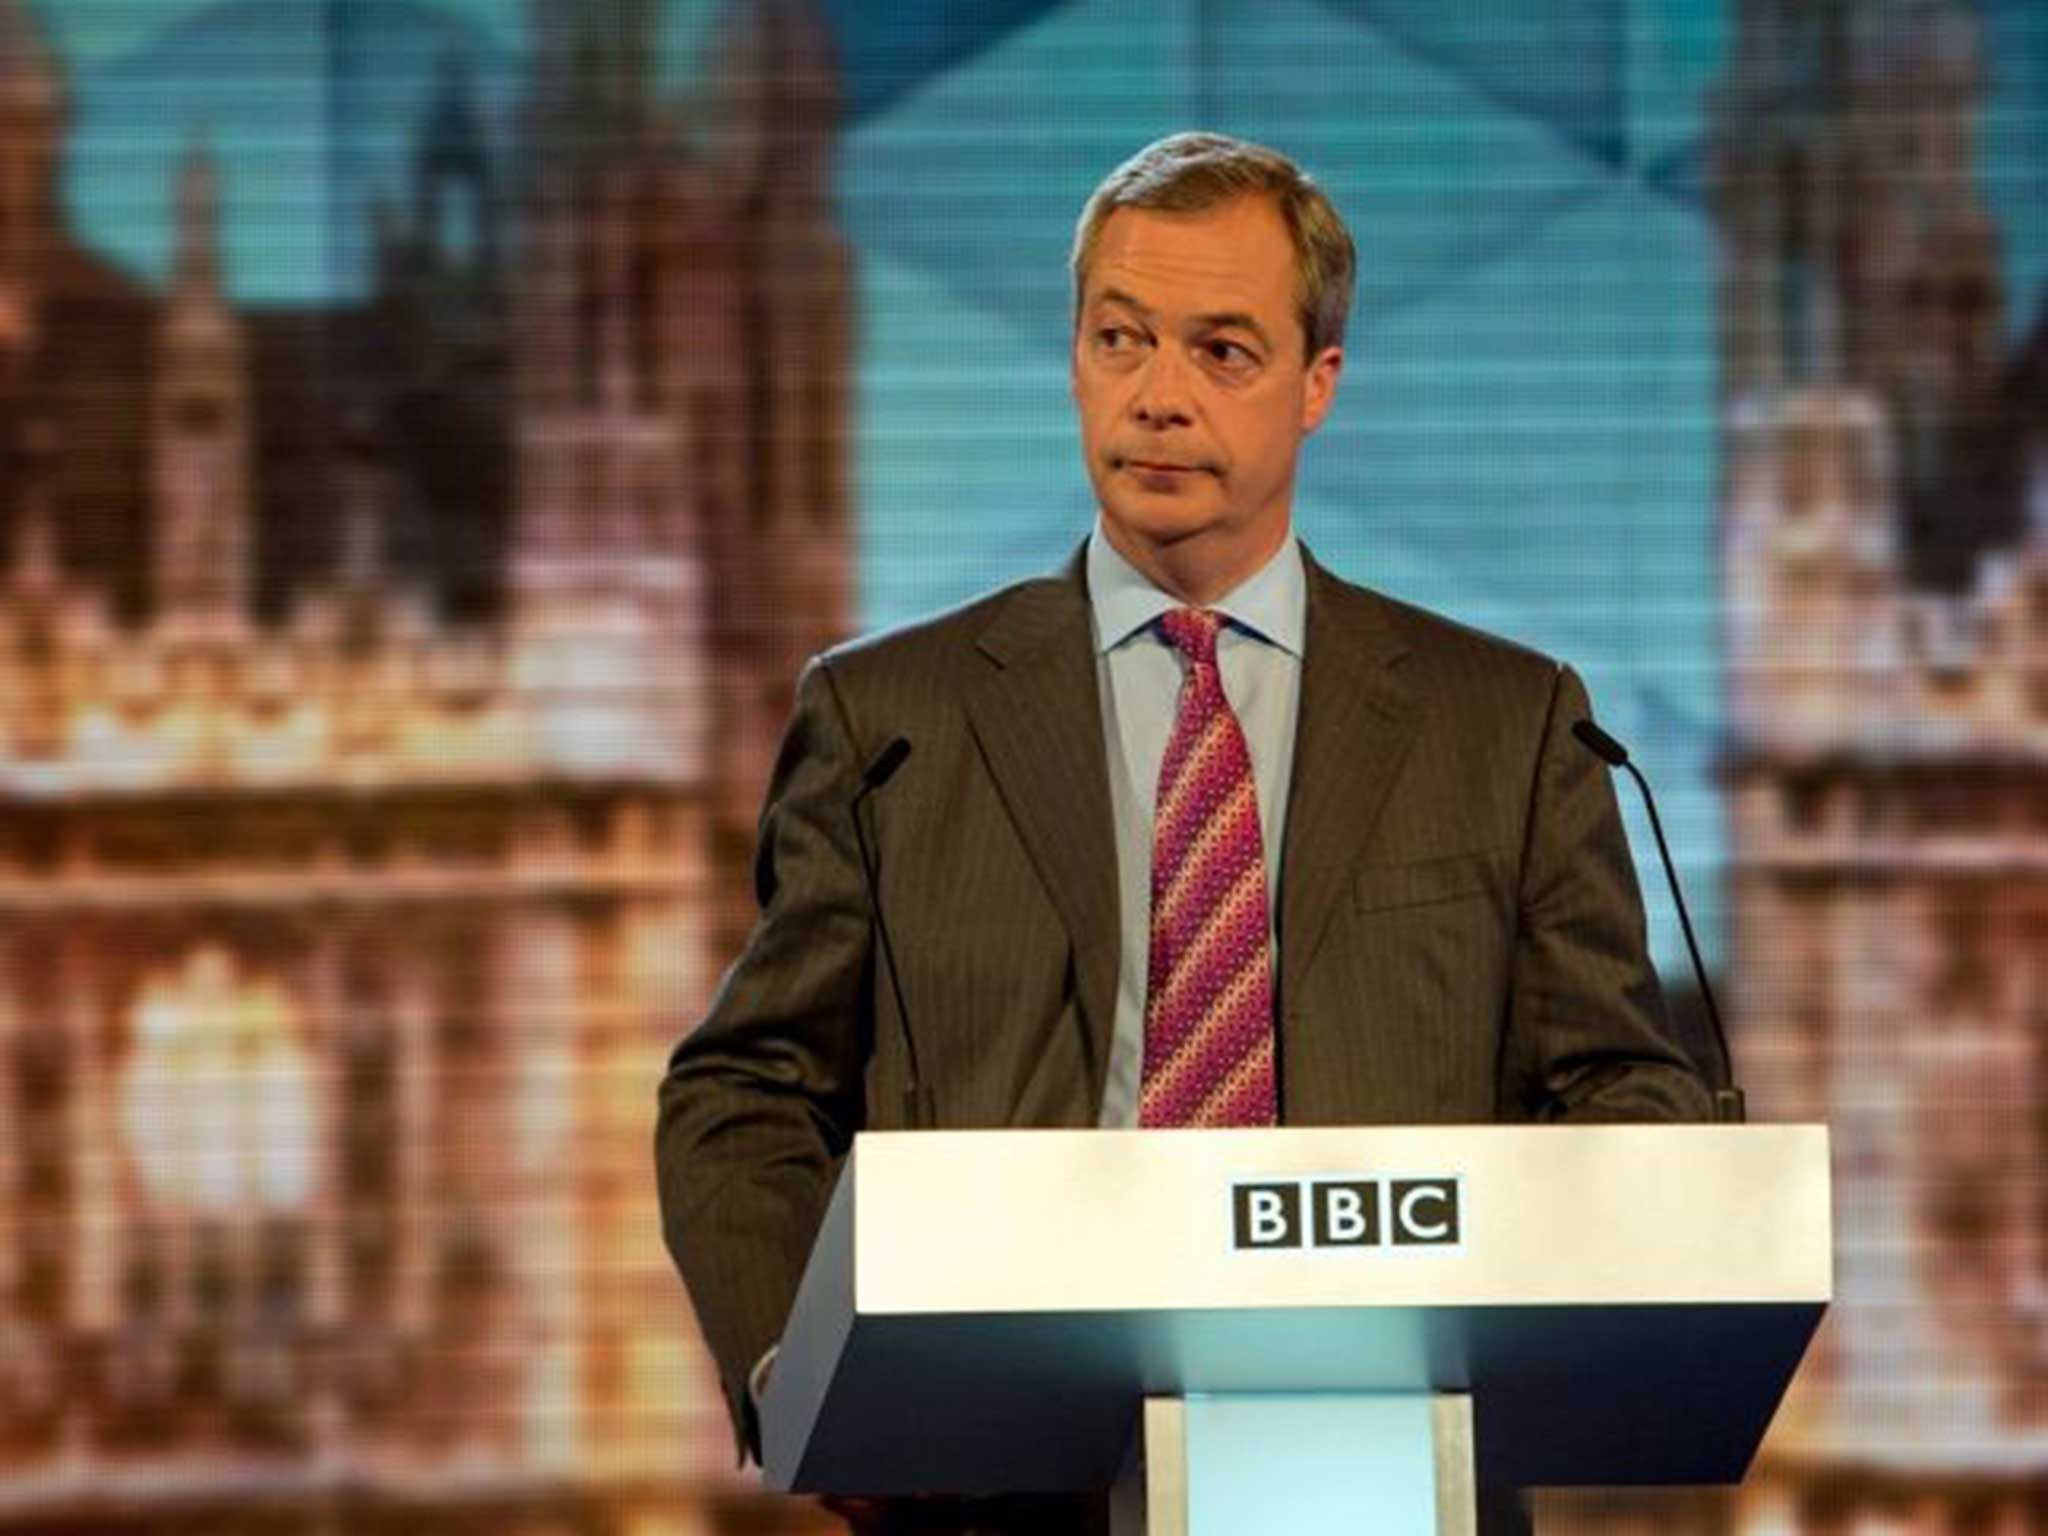 Nigel Farage cut a lonely figure in the debate